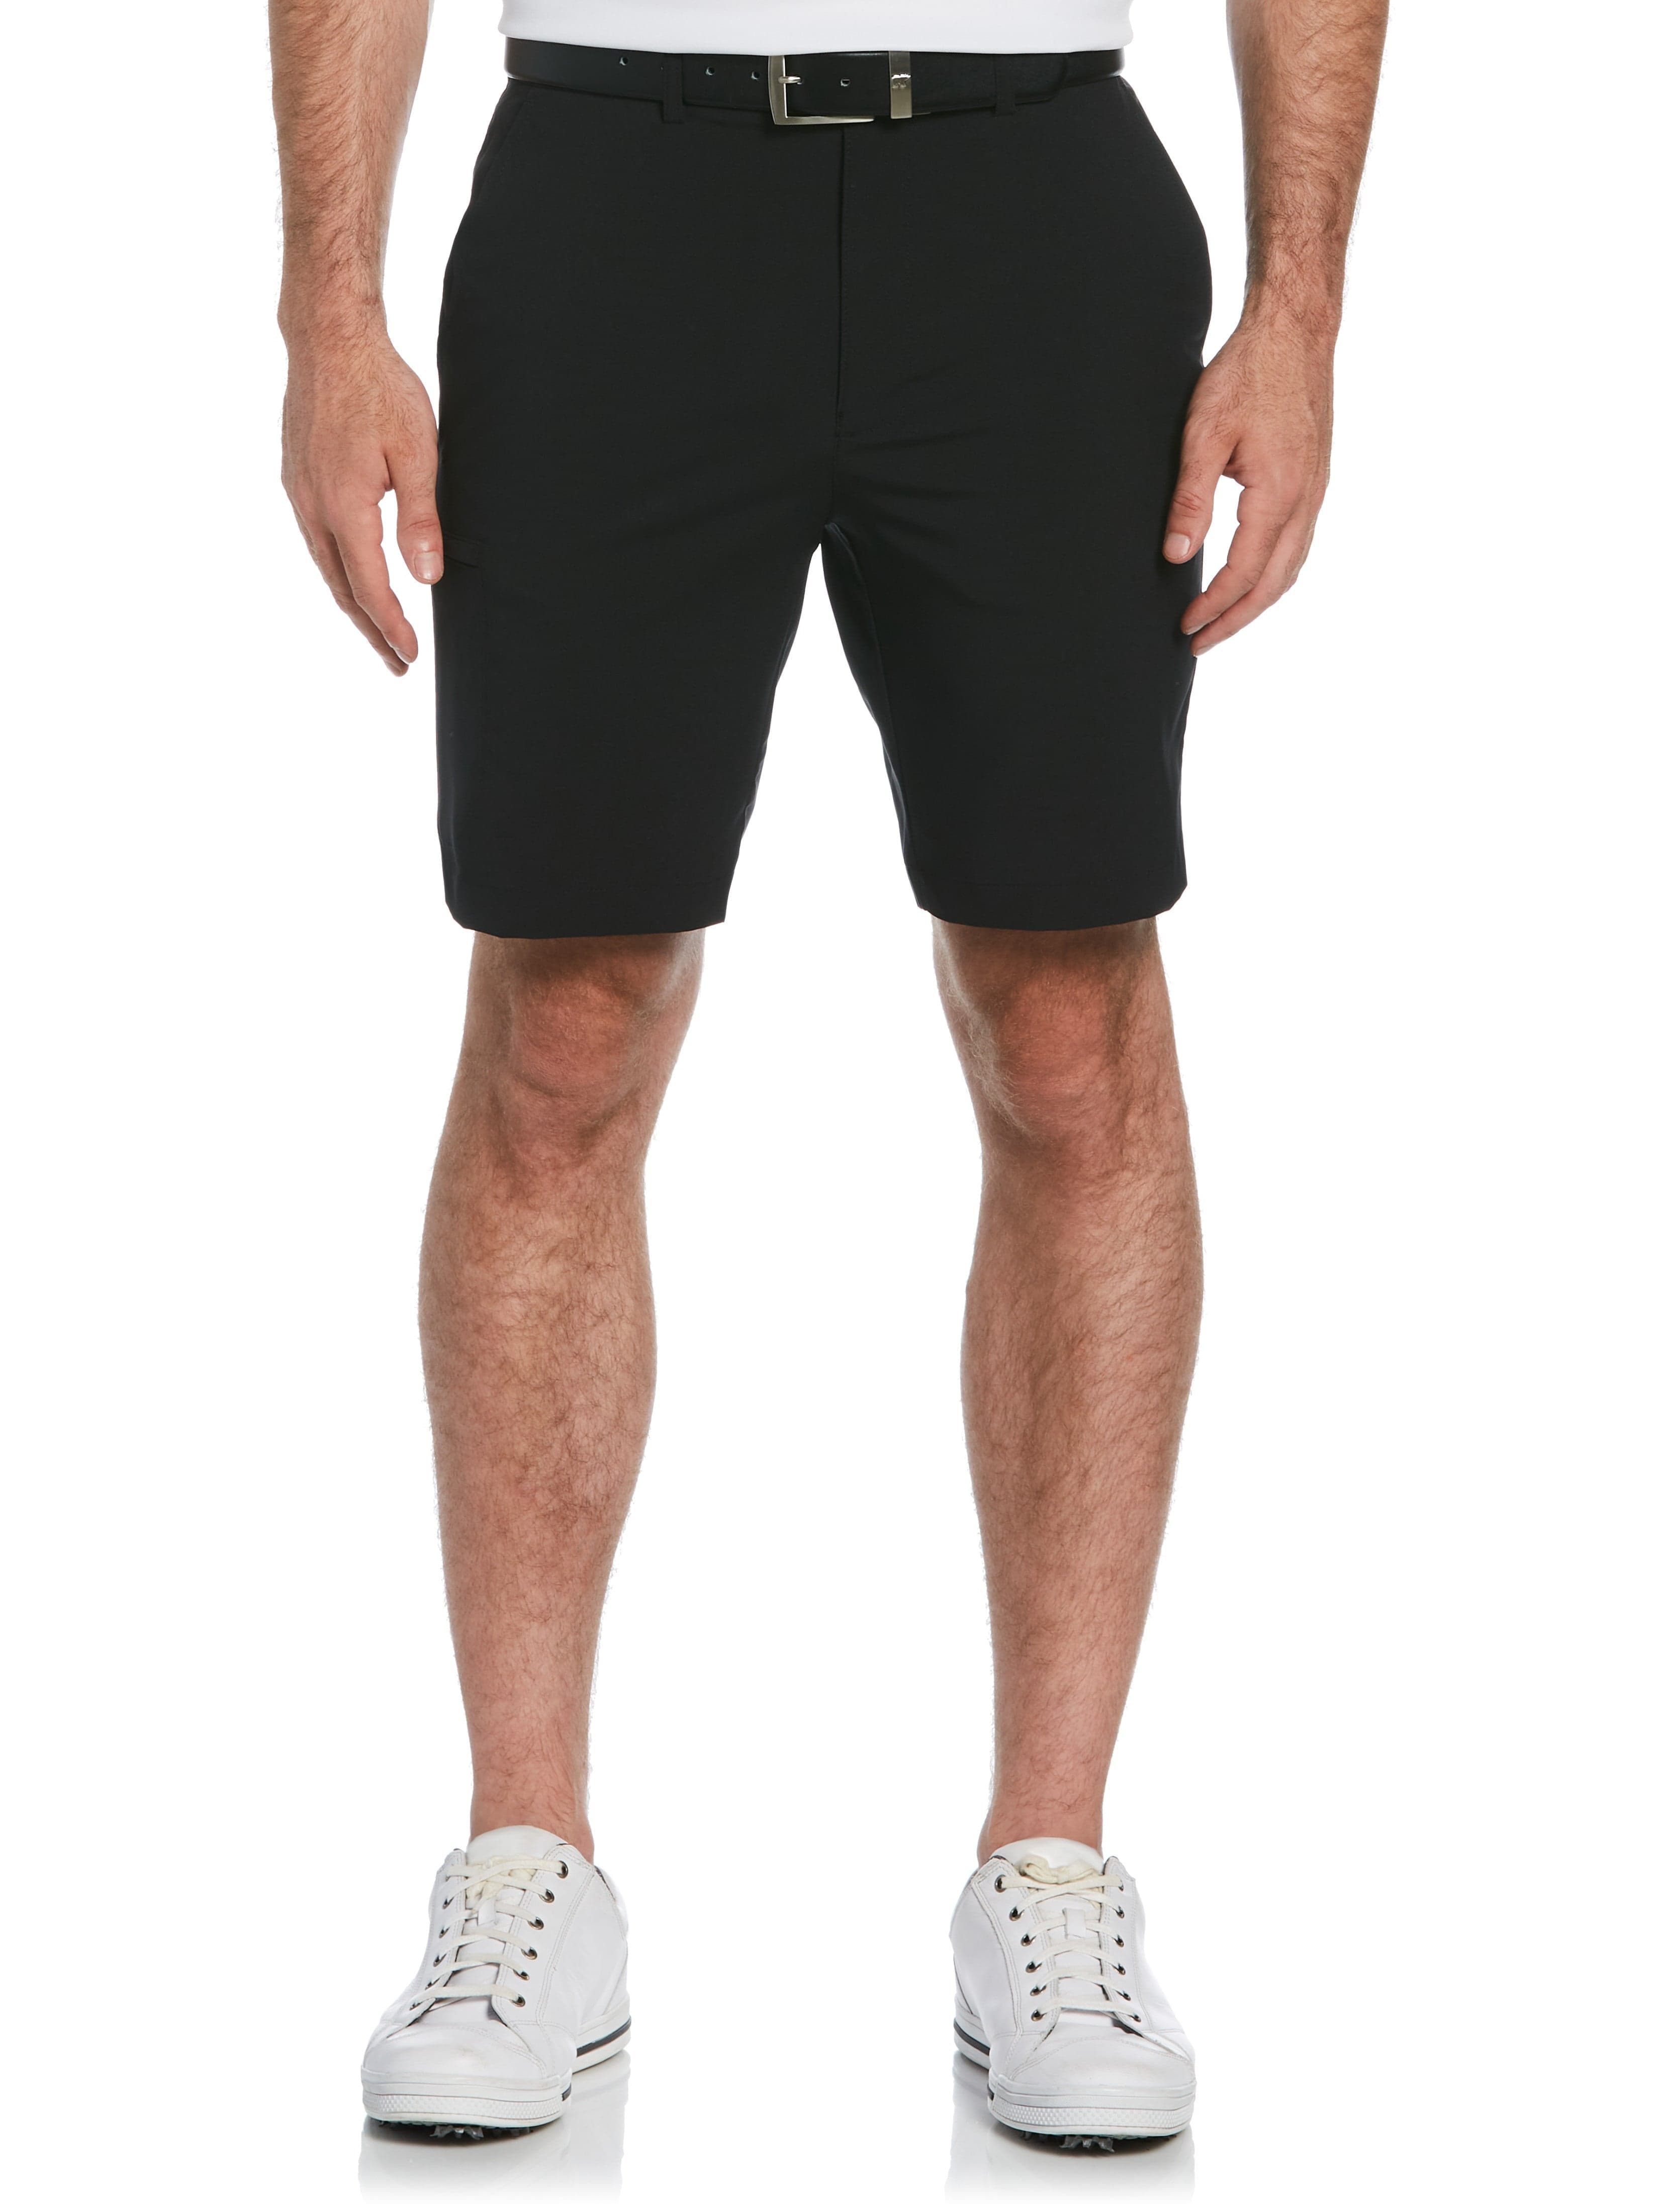 Jack Nicklaus Mens Flat Front Solid Golf Shorts w/ Cargo Pocket, Size 40, Black, 100% Polyester | Golf Apparel Shop